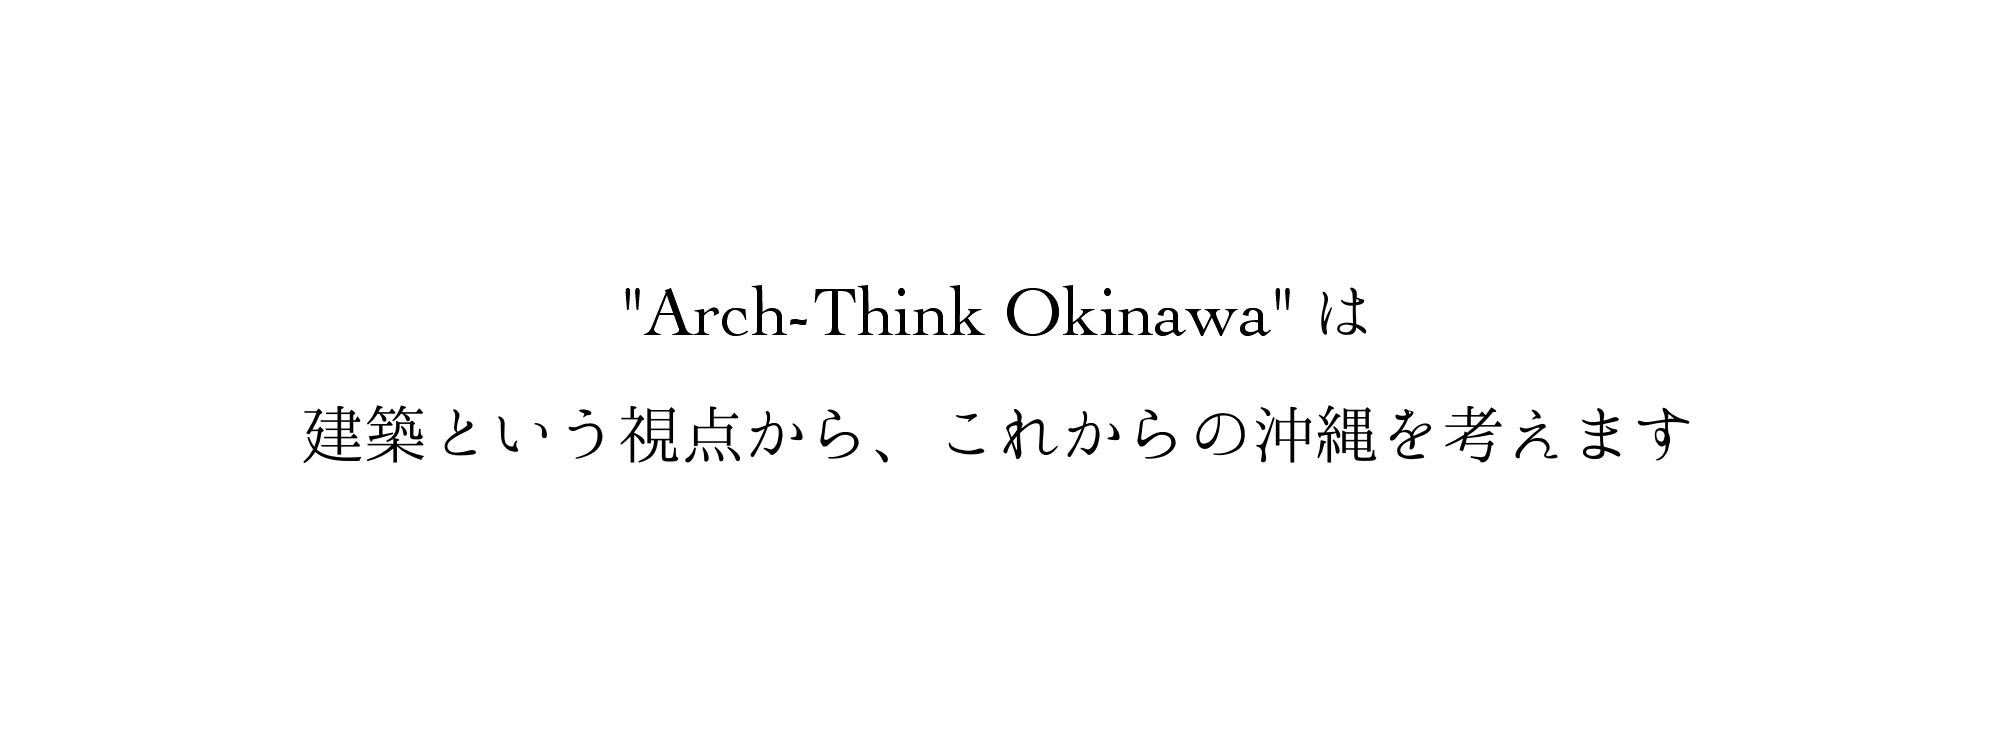 Arch-Think Okinawa